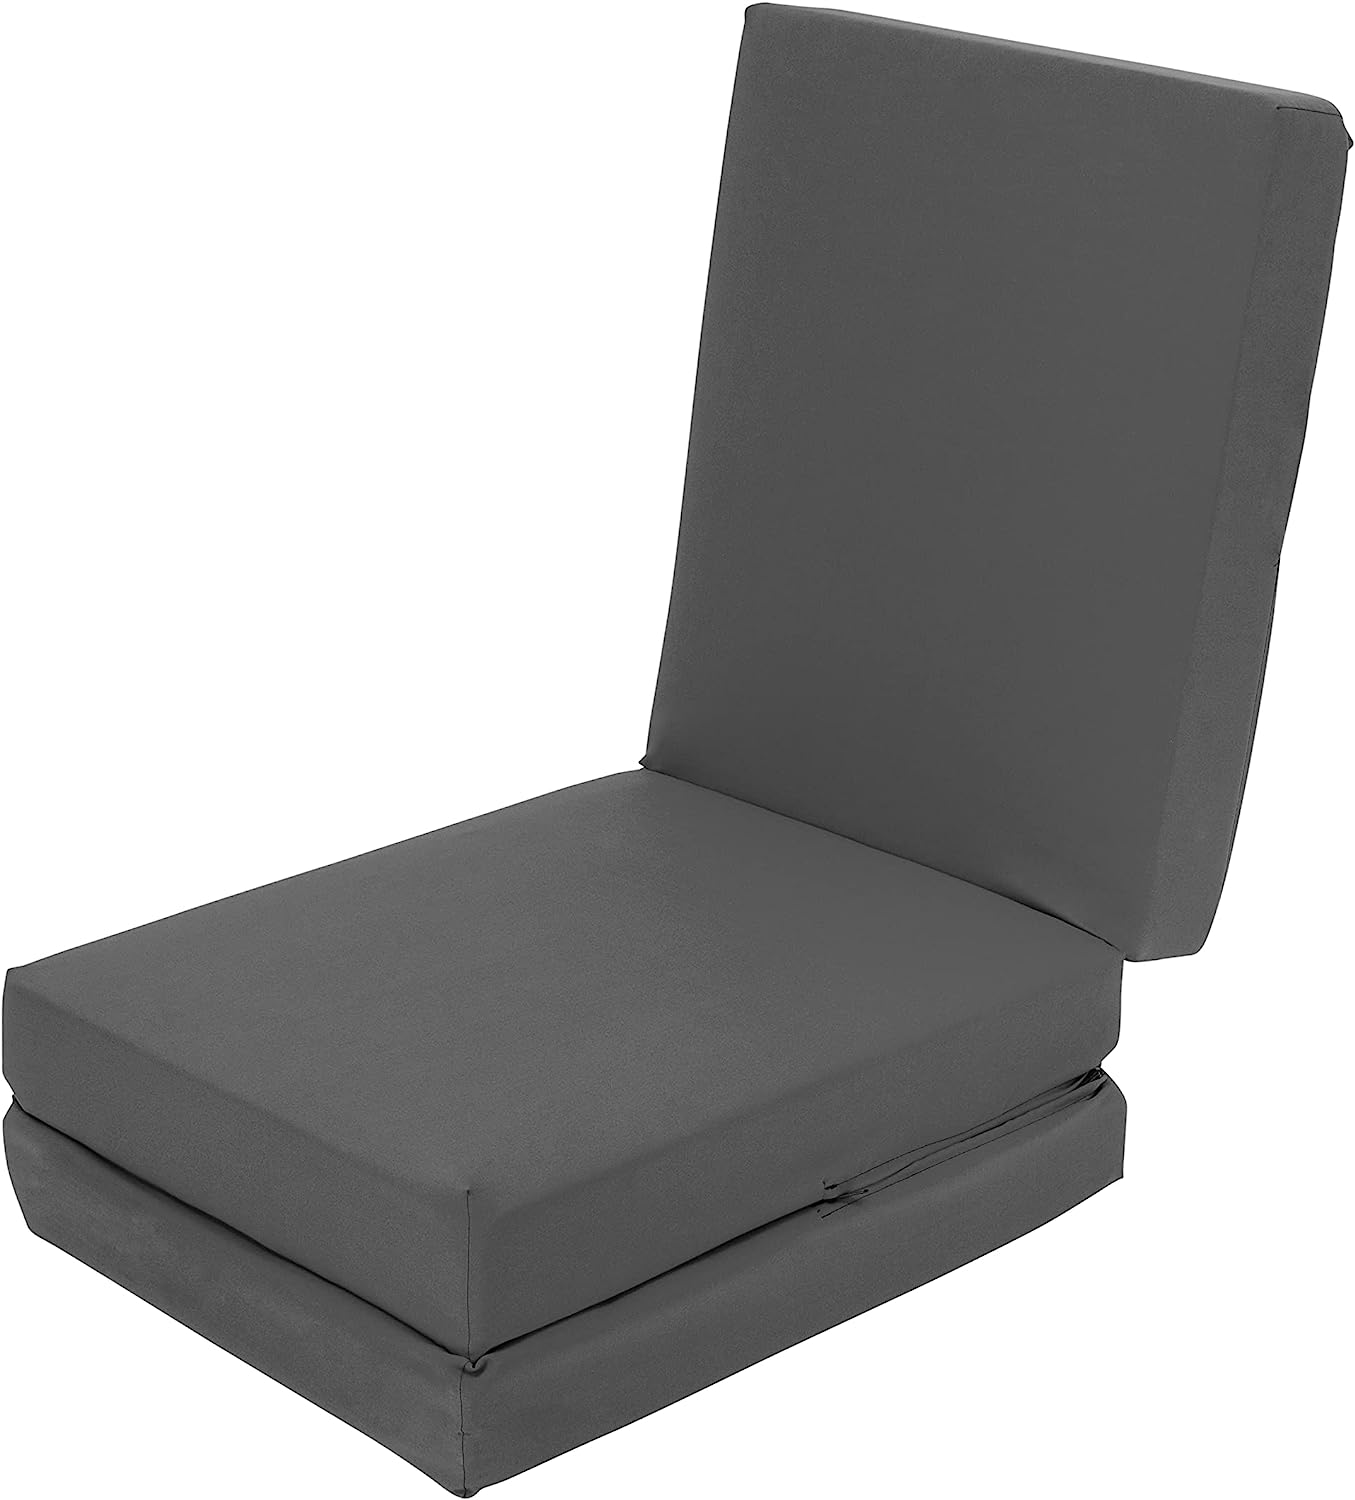 Fold Out CUBE Futon Single Guest Z Chair Bed Folding Mattress Sofa